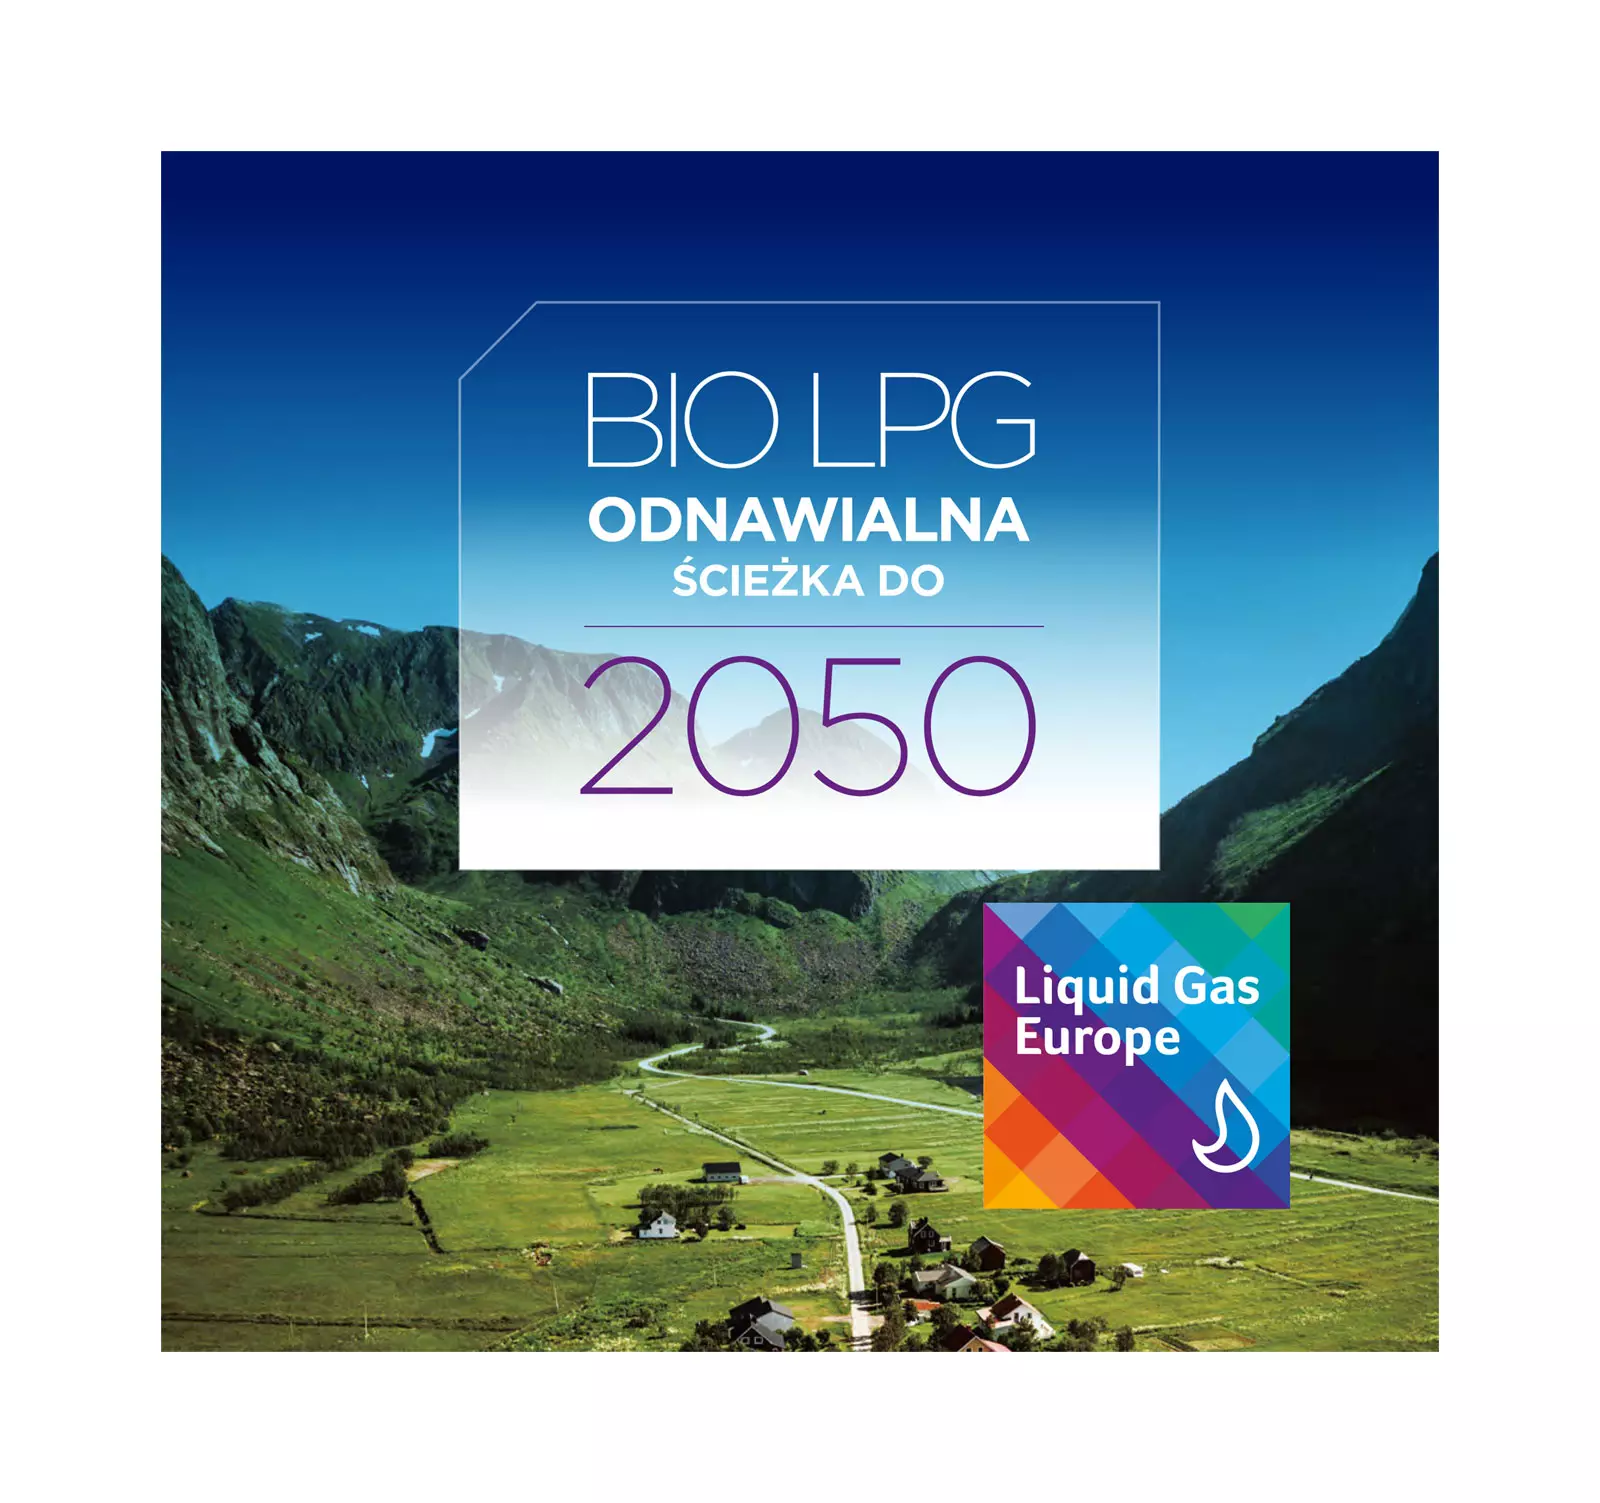 Bio LPG wg Liquid Gas Europe